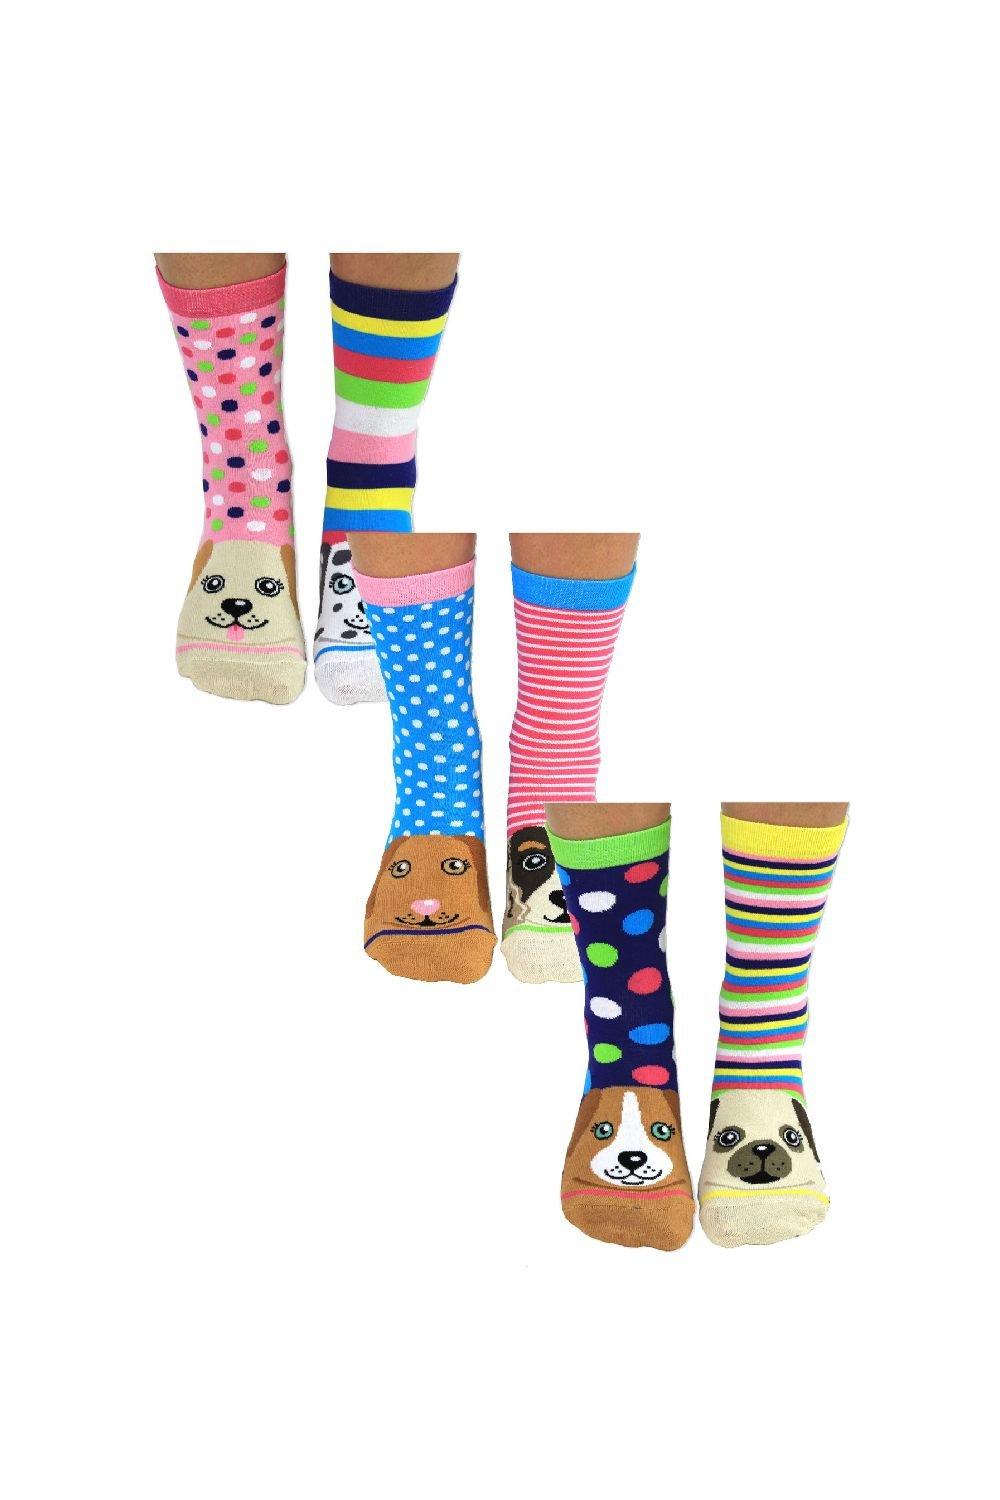 6 Pack Puppy Dog Novelty Cotton Odd Socks in Gift Box